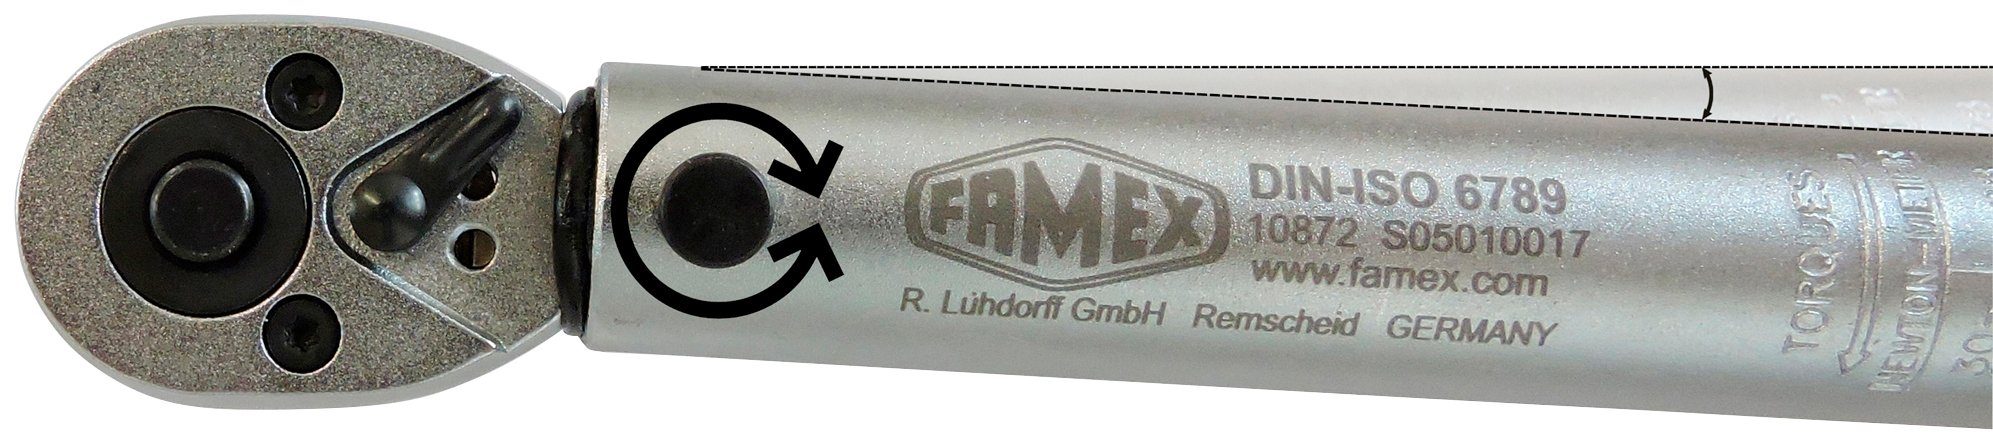 Pro R+L FAMEX Drehmomentschlüssel